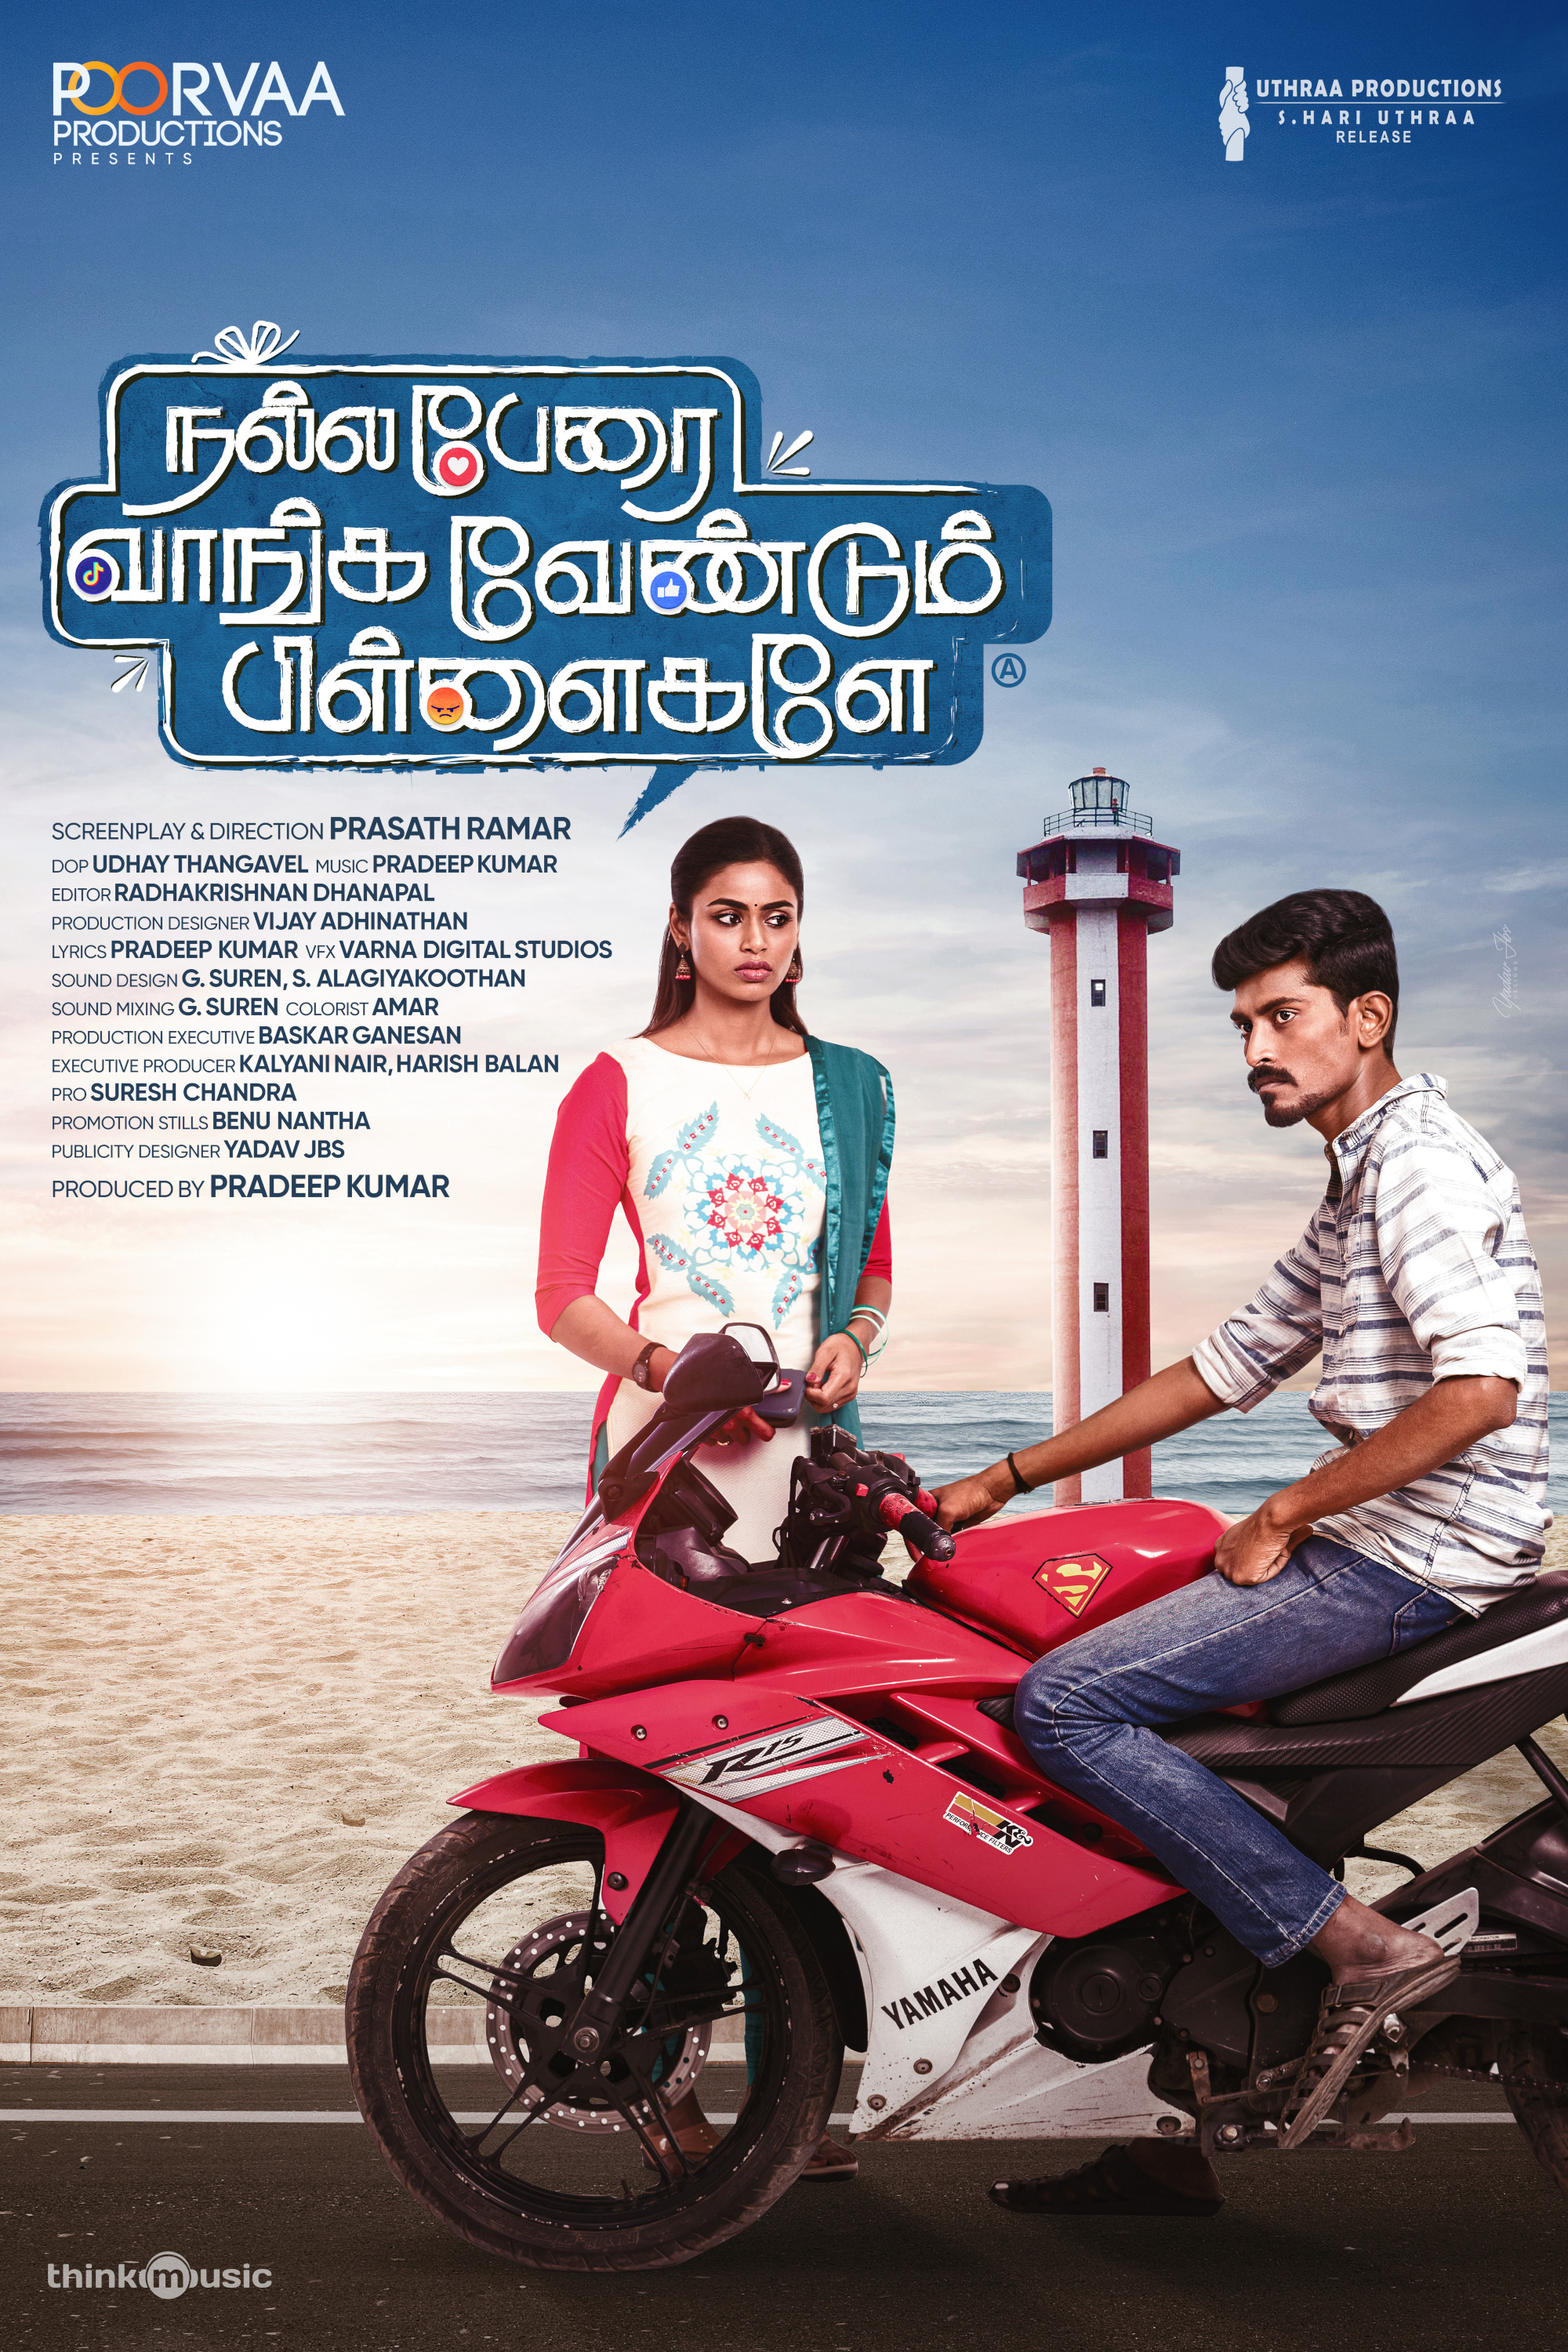 Mega Sized Movie Poster Image for Nalla Perai Vaanga Vendum Pillaigale (#3 of 9)